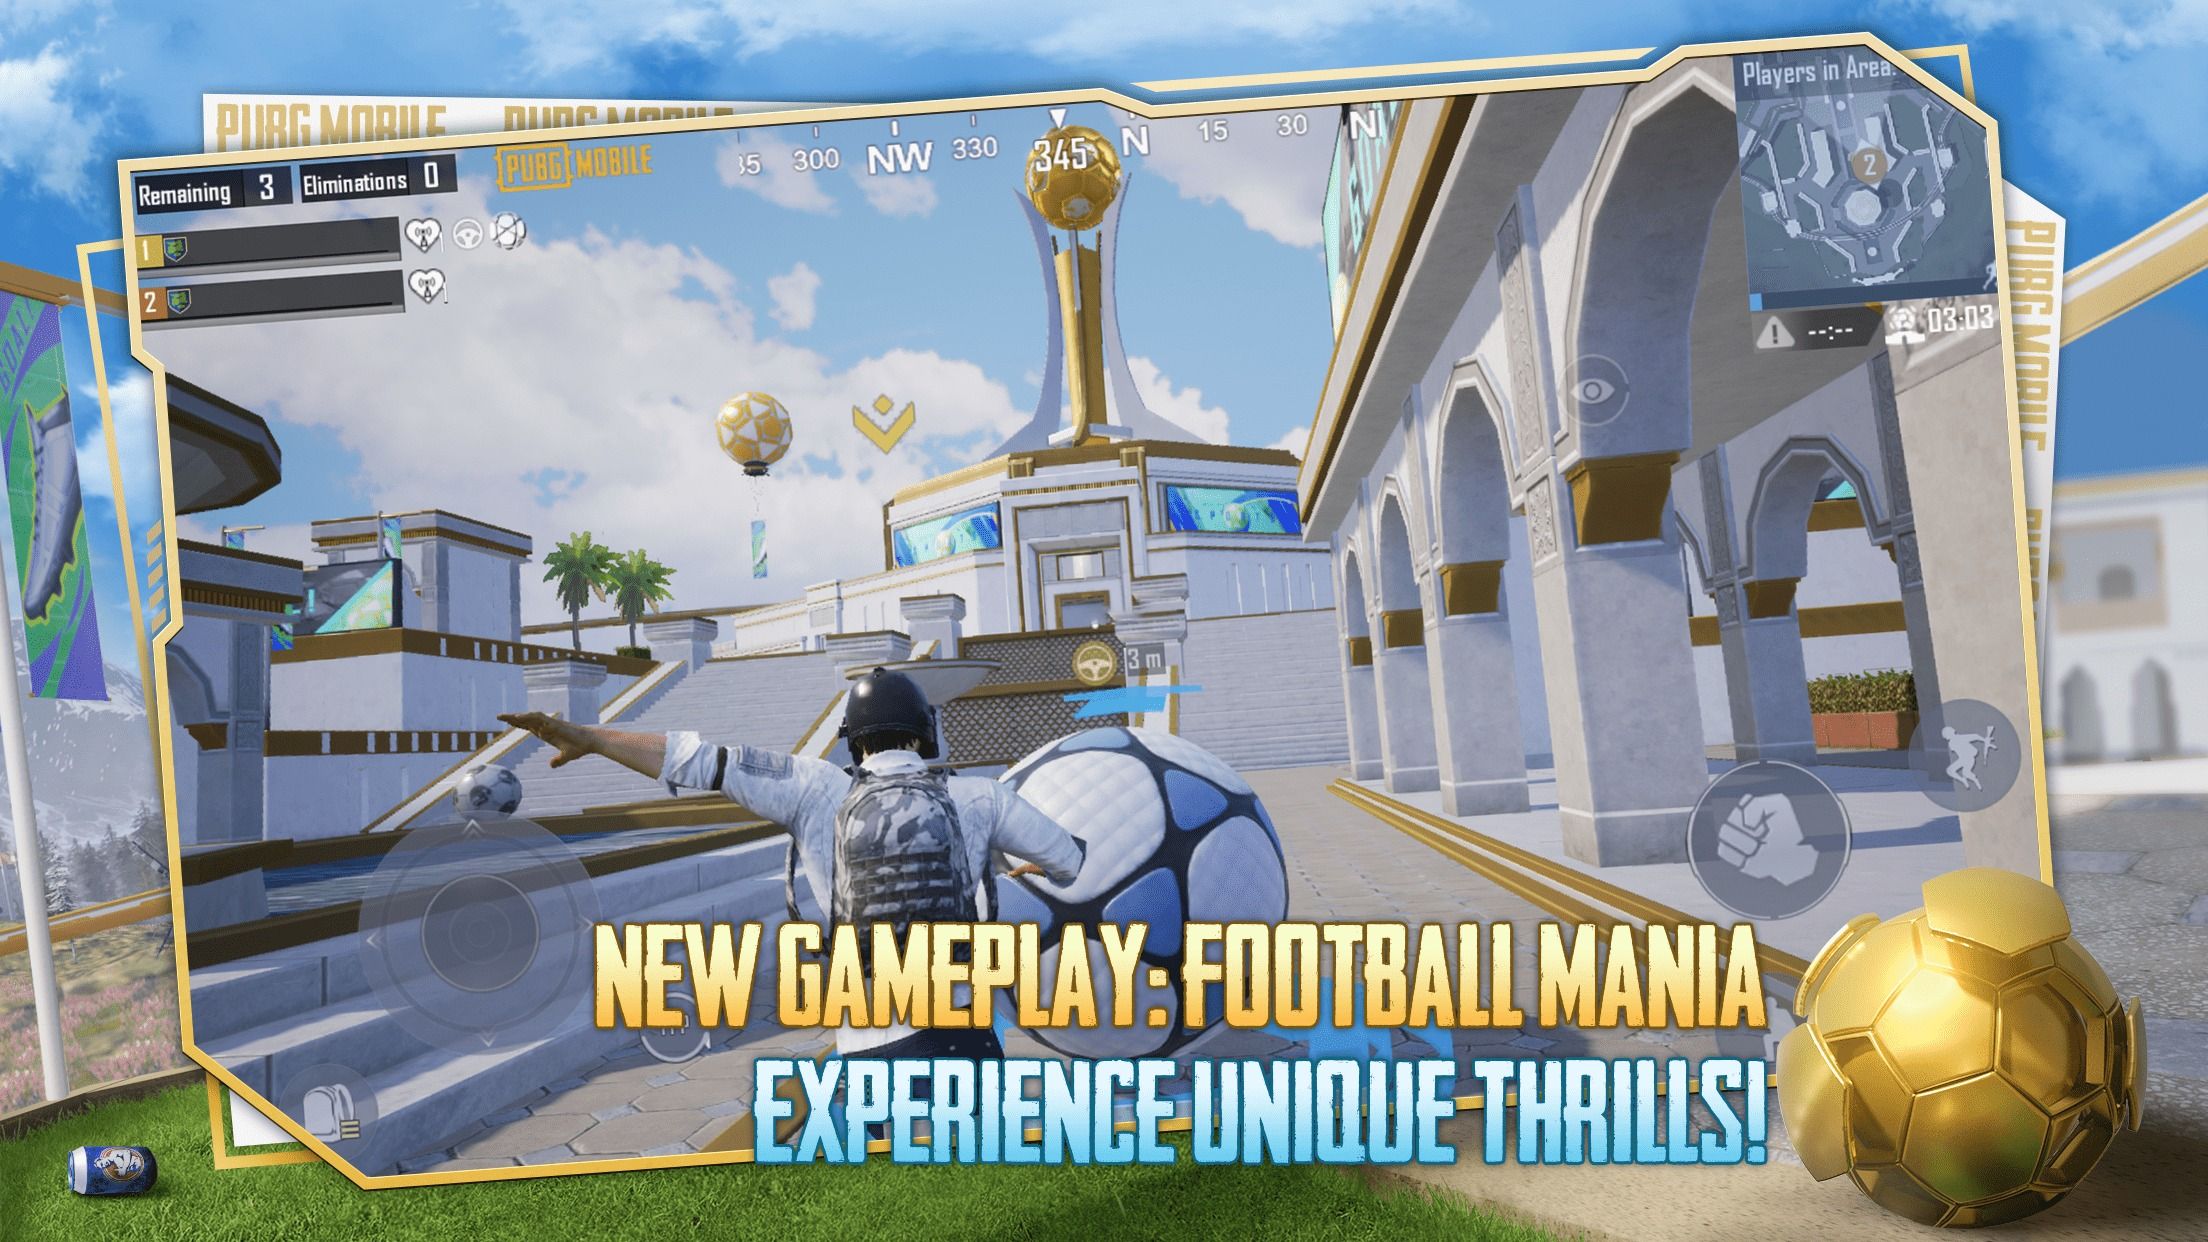 PUBG Mobile kicks off new soccer-themed game modes, Digital Rumble, digitalrumble.com